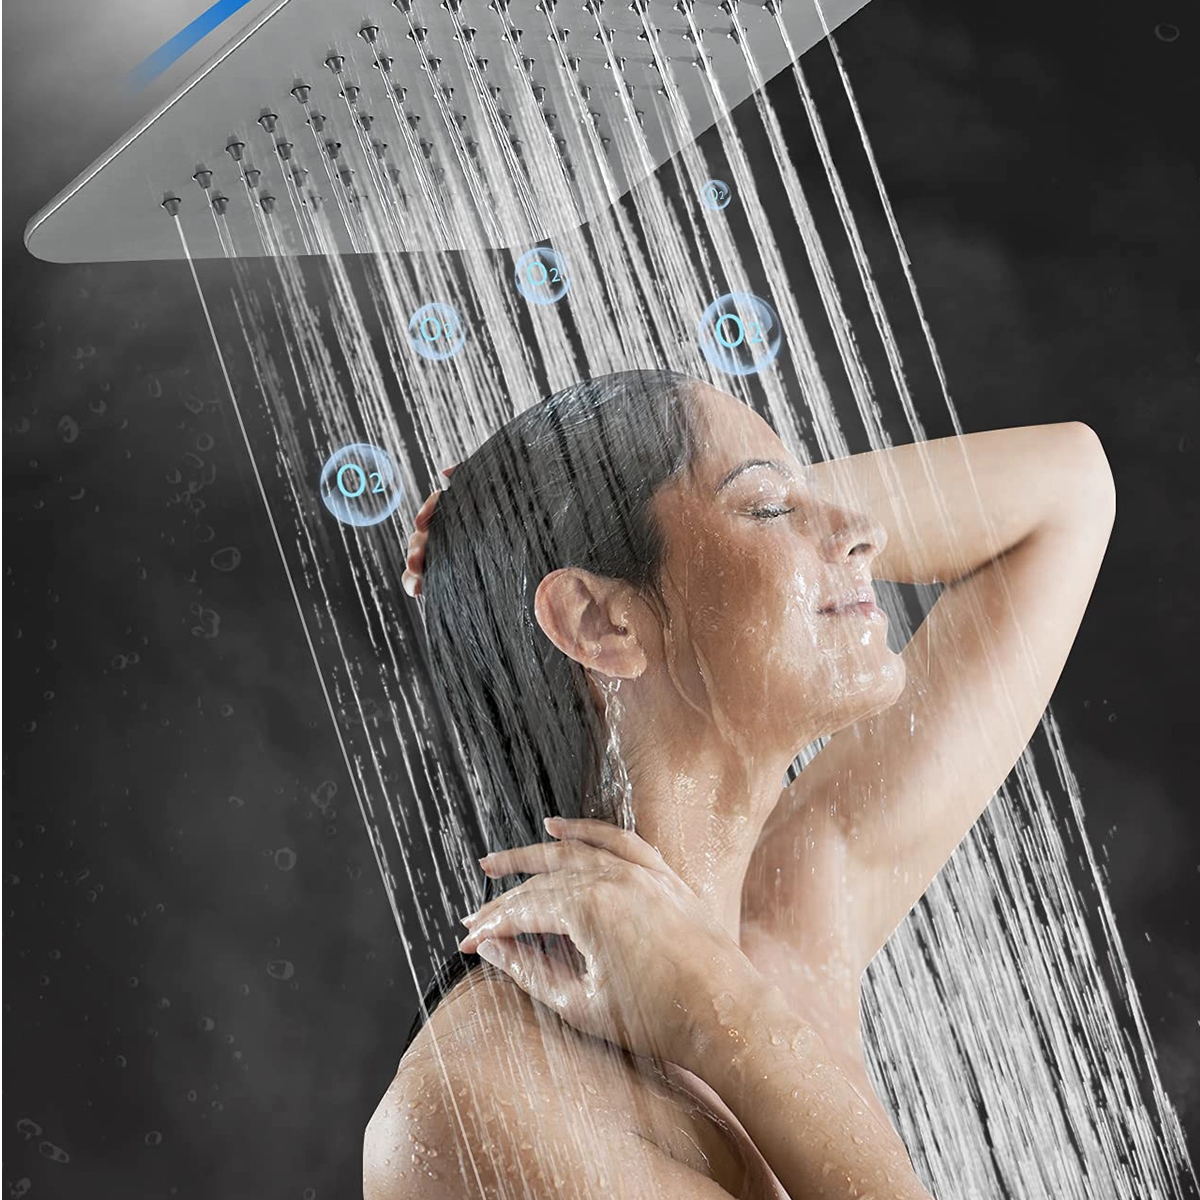 Aquacubic Bathroom Concealed Polished Chrome Shower Set Wall Mounted High Pressure Shower System